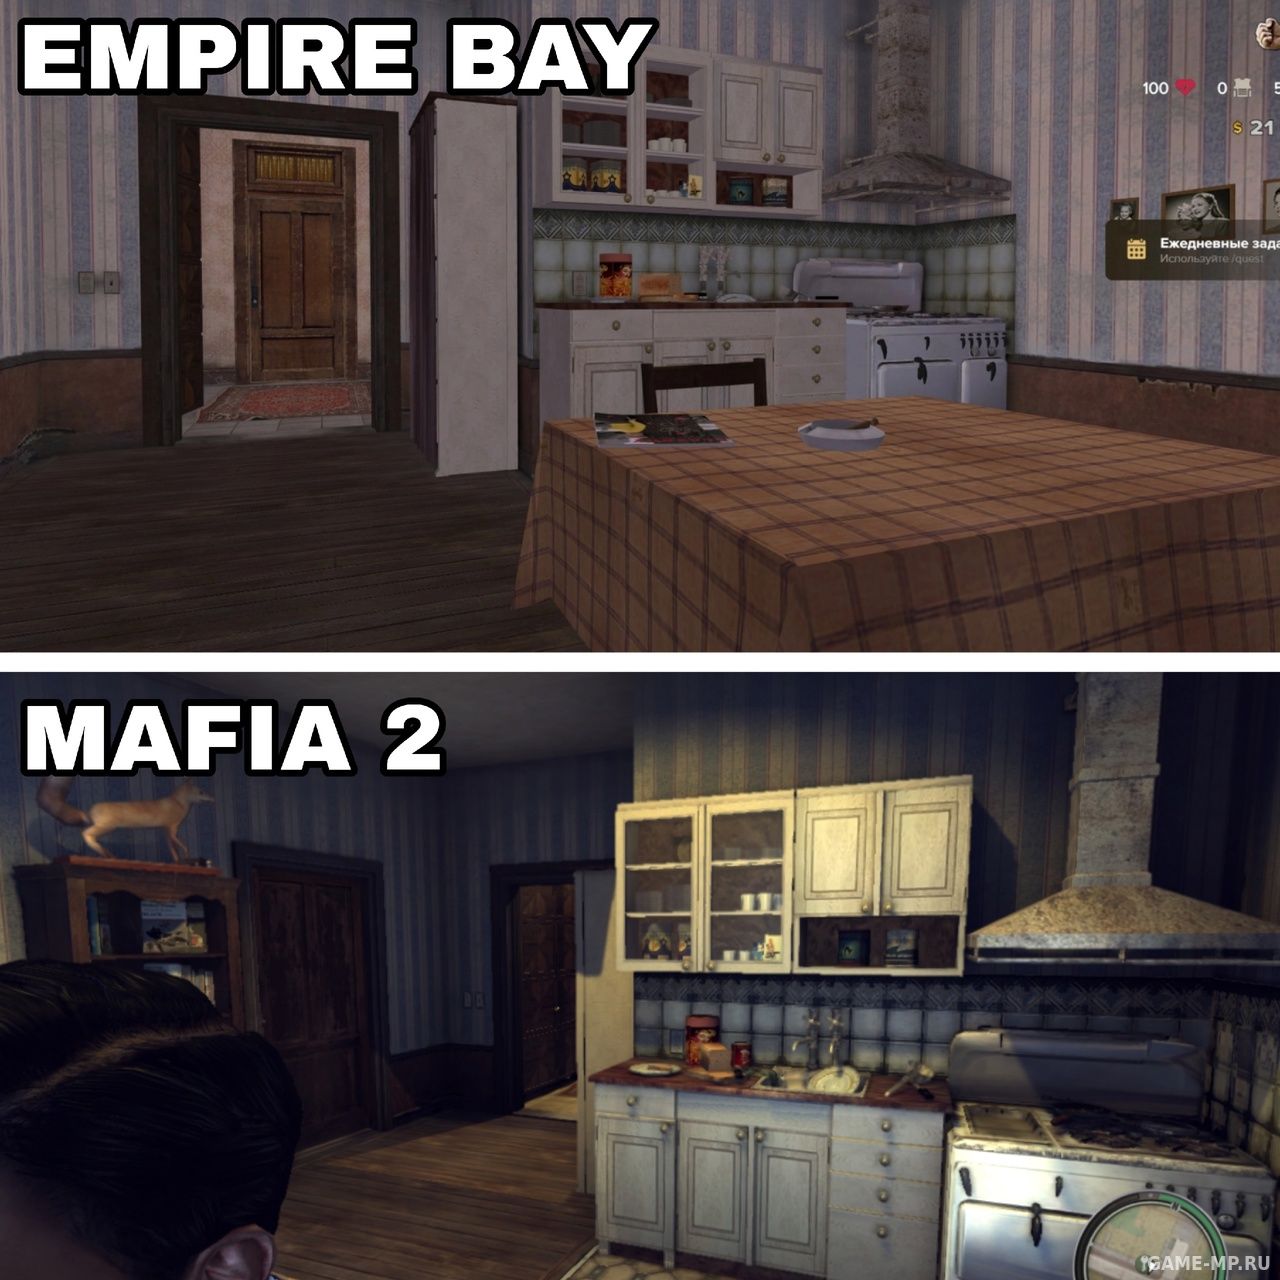 Проект про Mafia 2 — Empire Bay показали интерьер одной из бюджетных квартир.